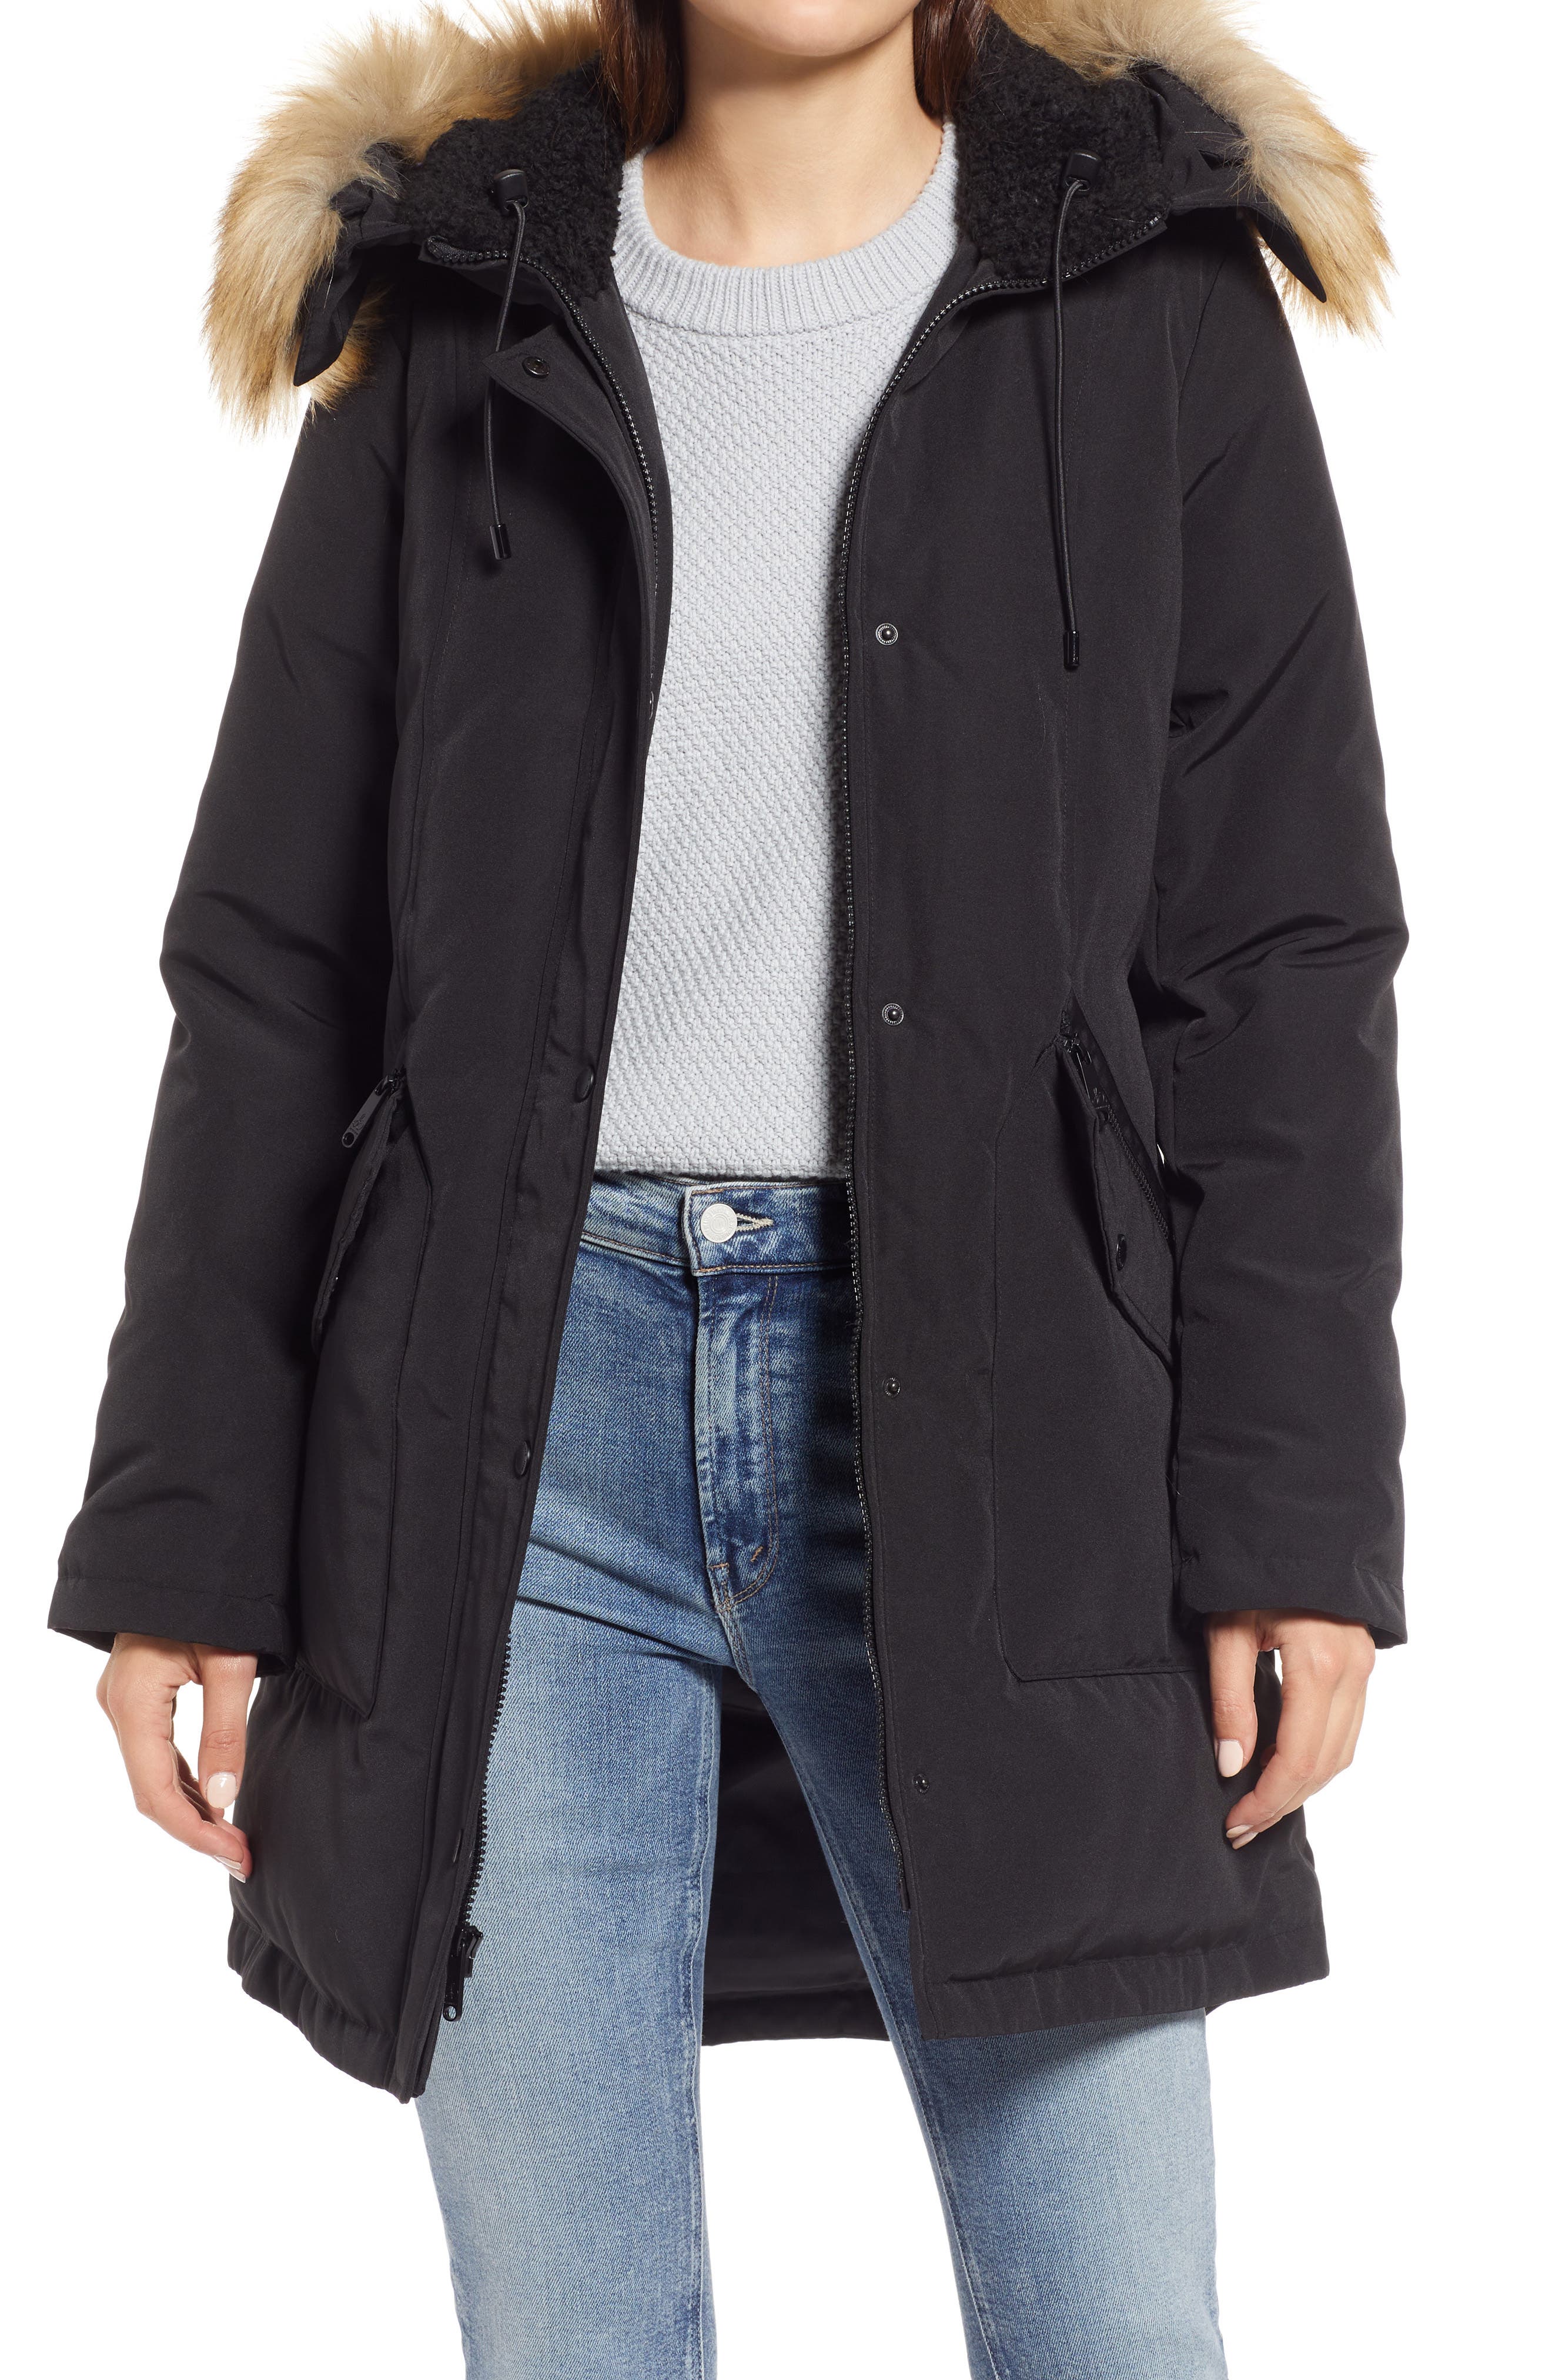 Beige/Brown L WOMEN FASHION Jackets Fur discount 76% SANYE vest 